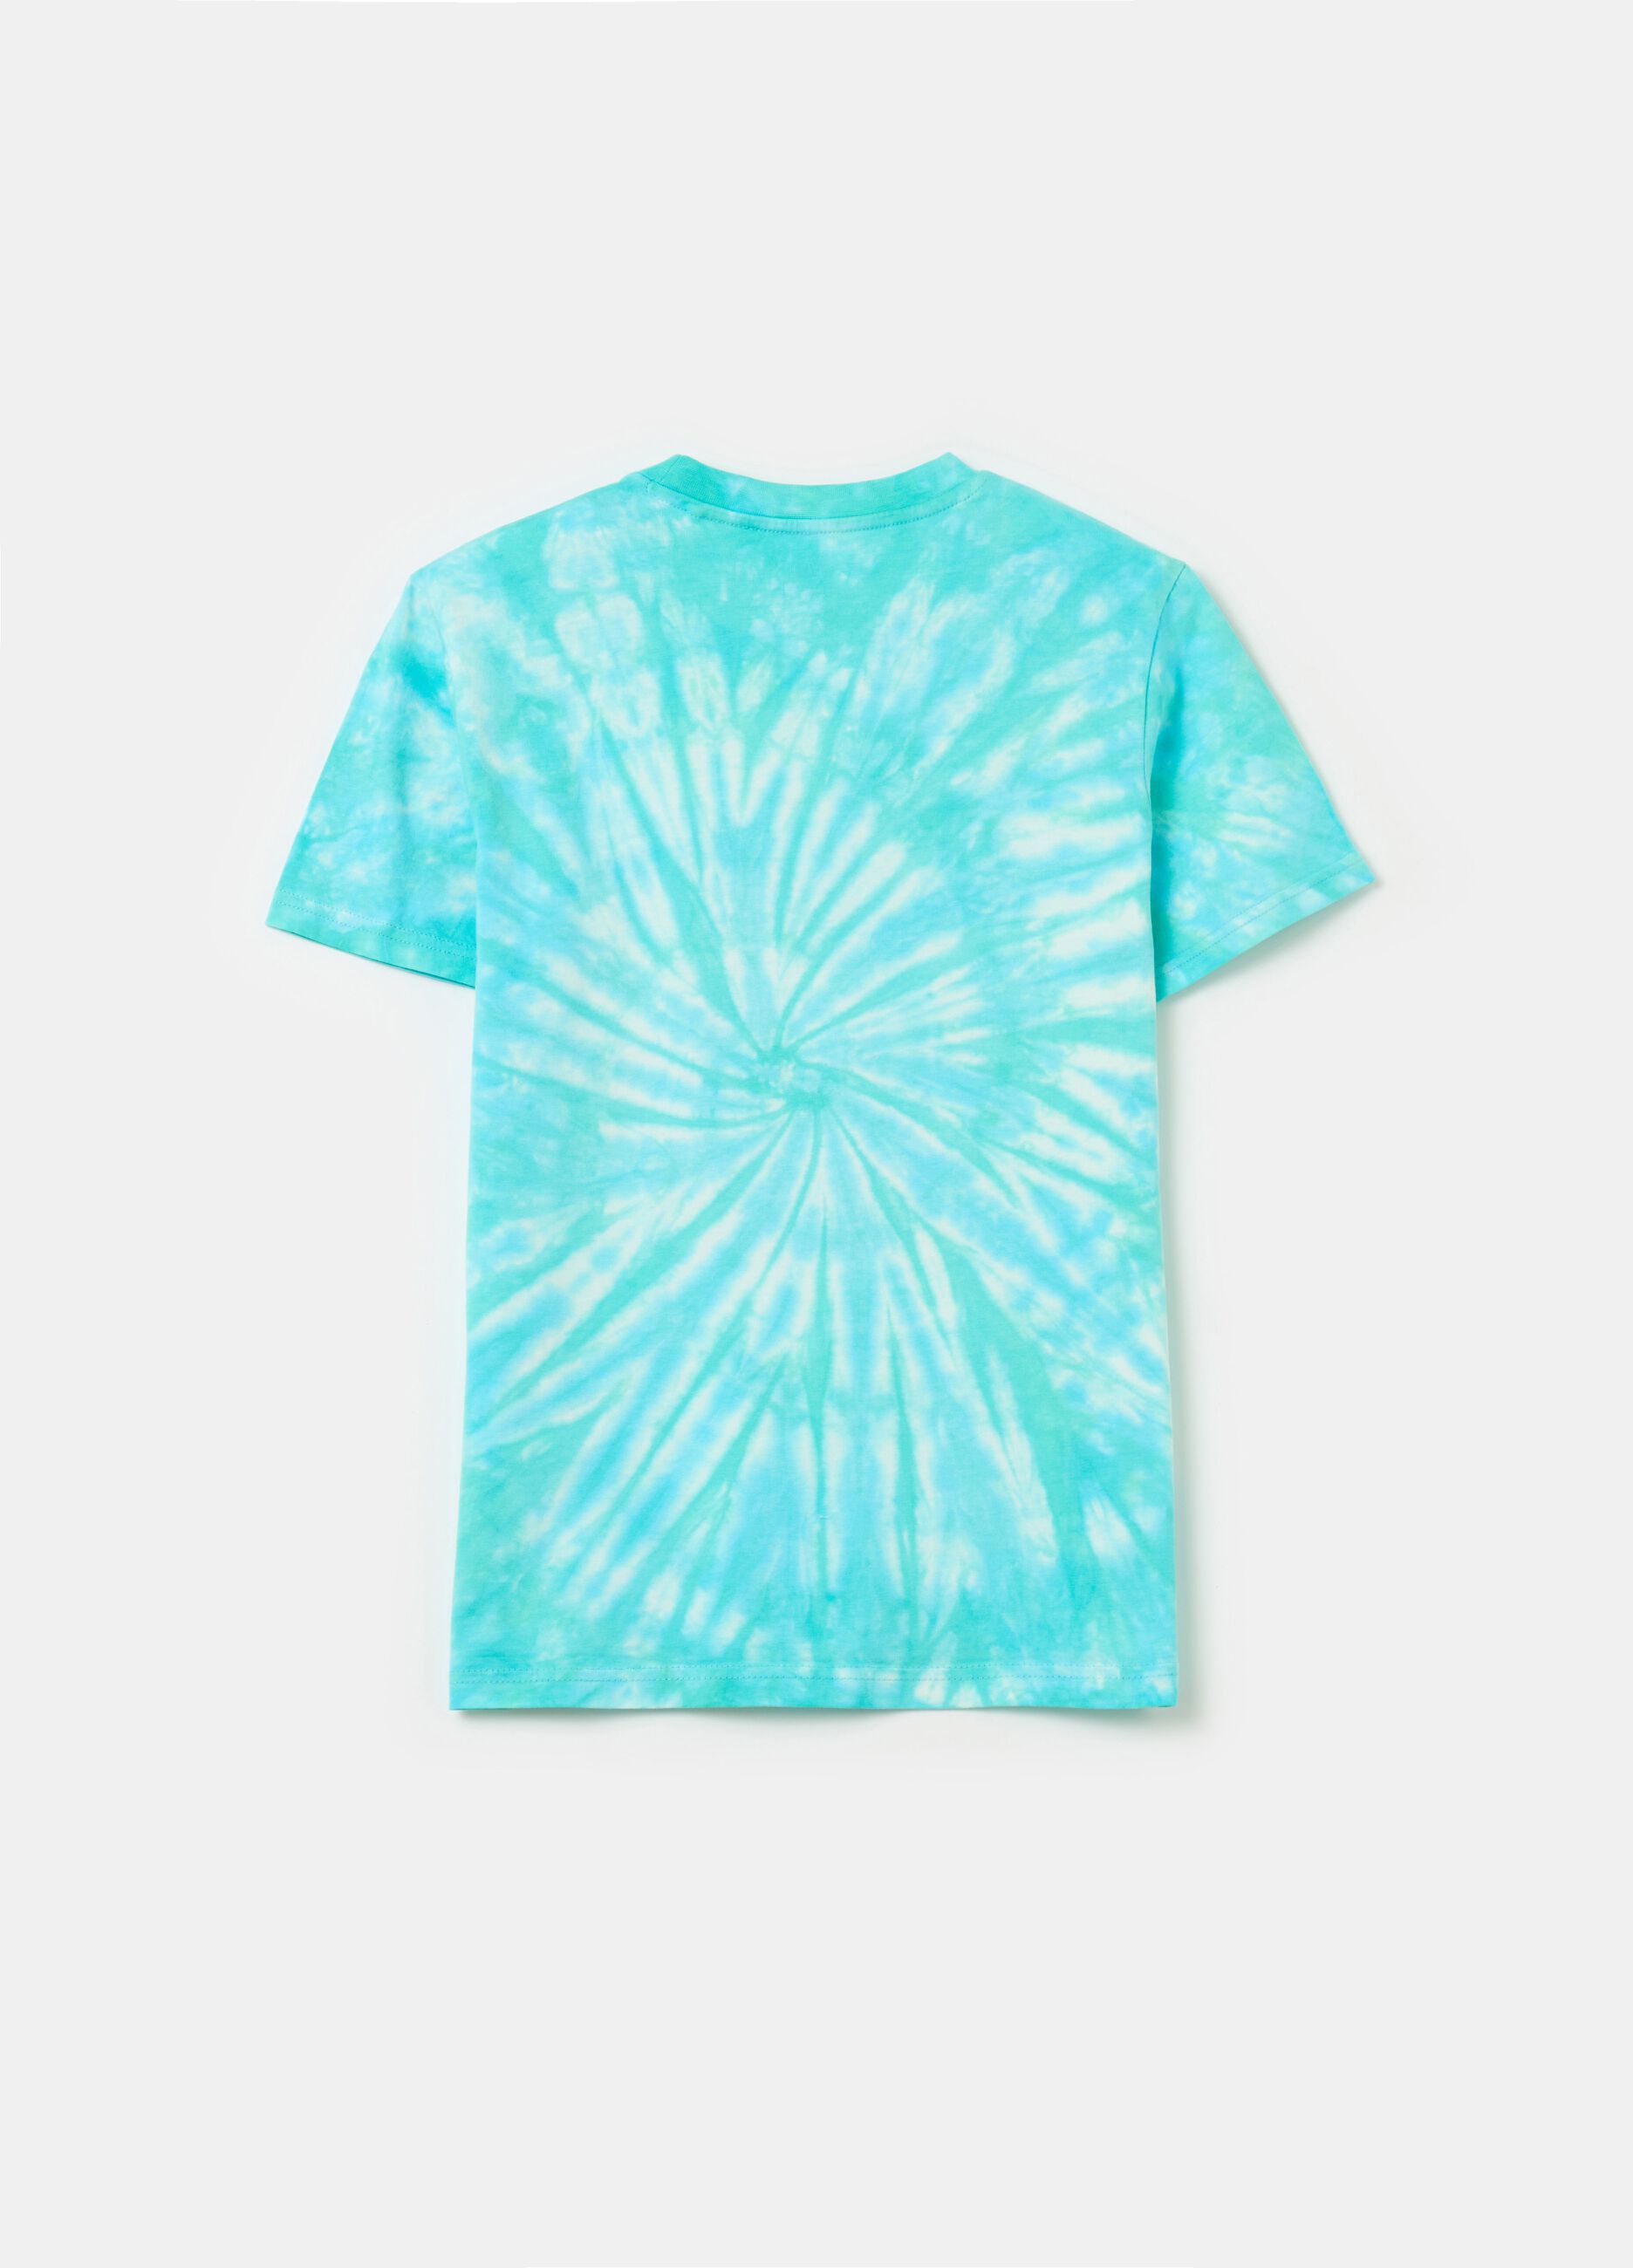 Cotton tie dye t-shirt with print